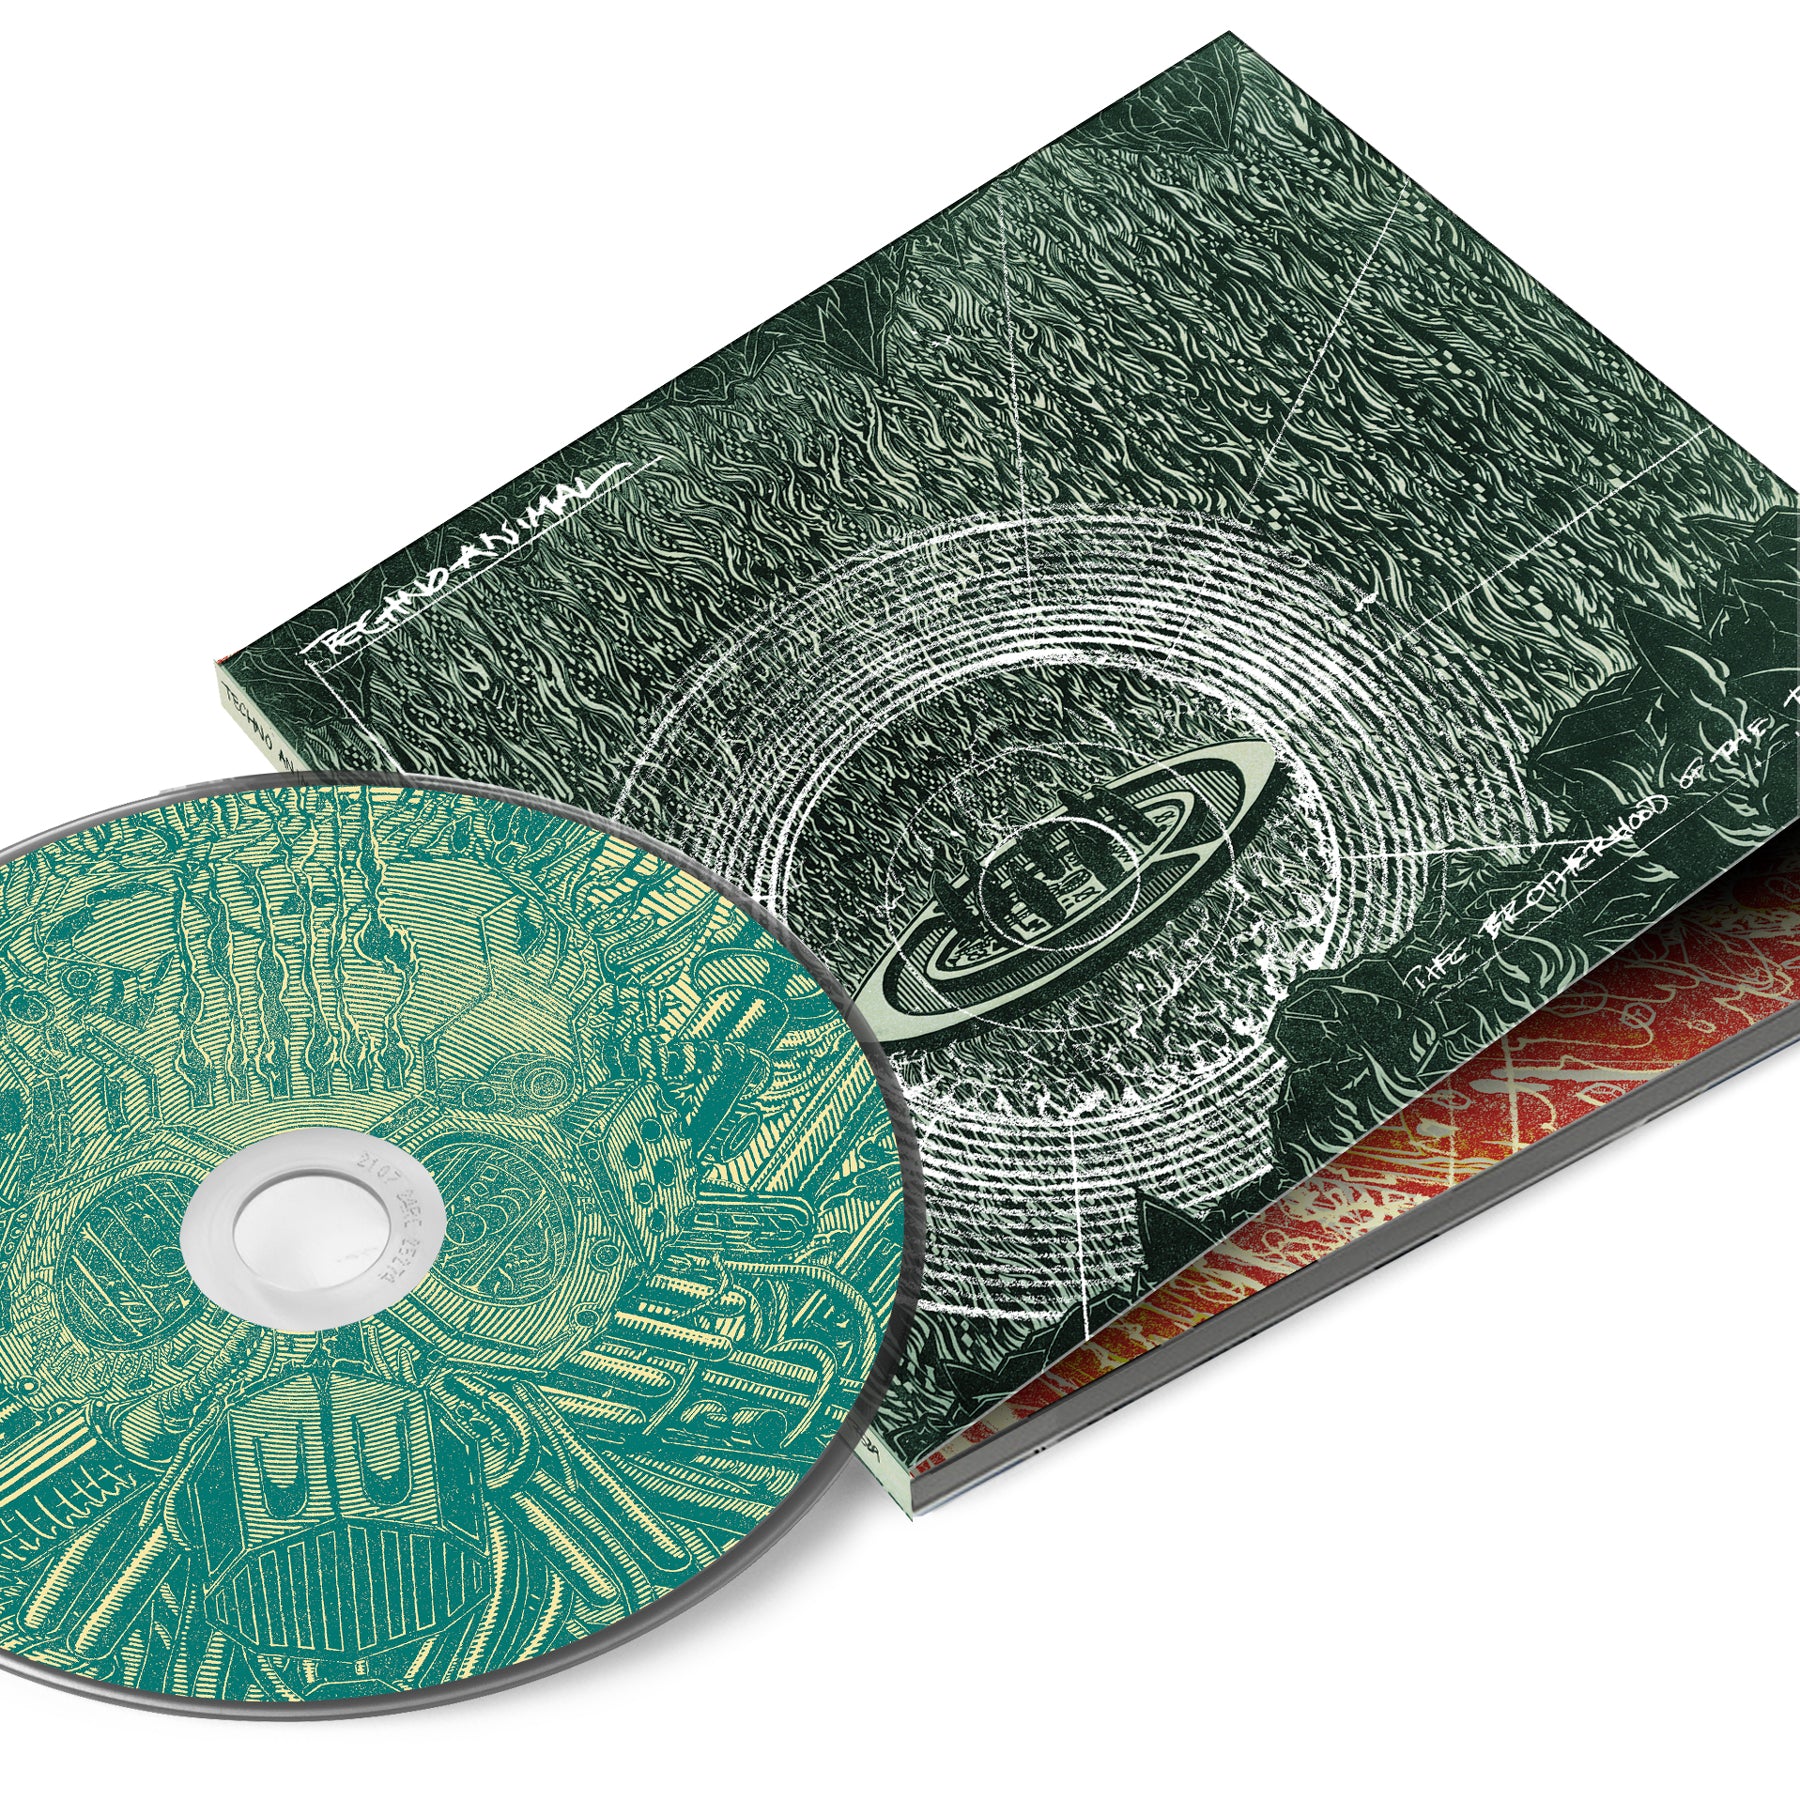 Pre-Order) Green Day-Saviors (INEX) (Pink/Black LP) – Cameron Records